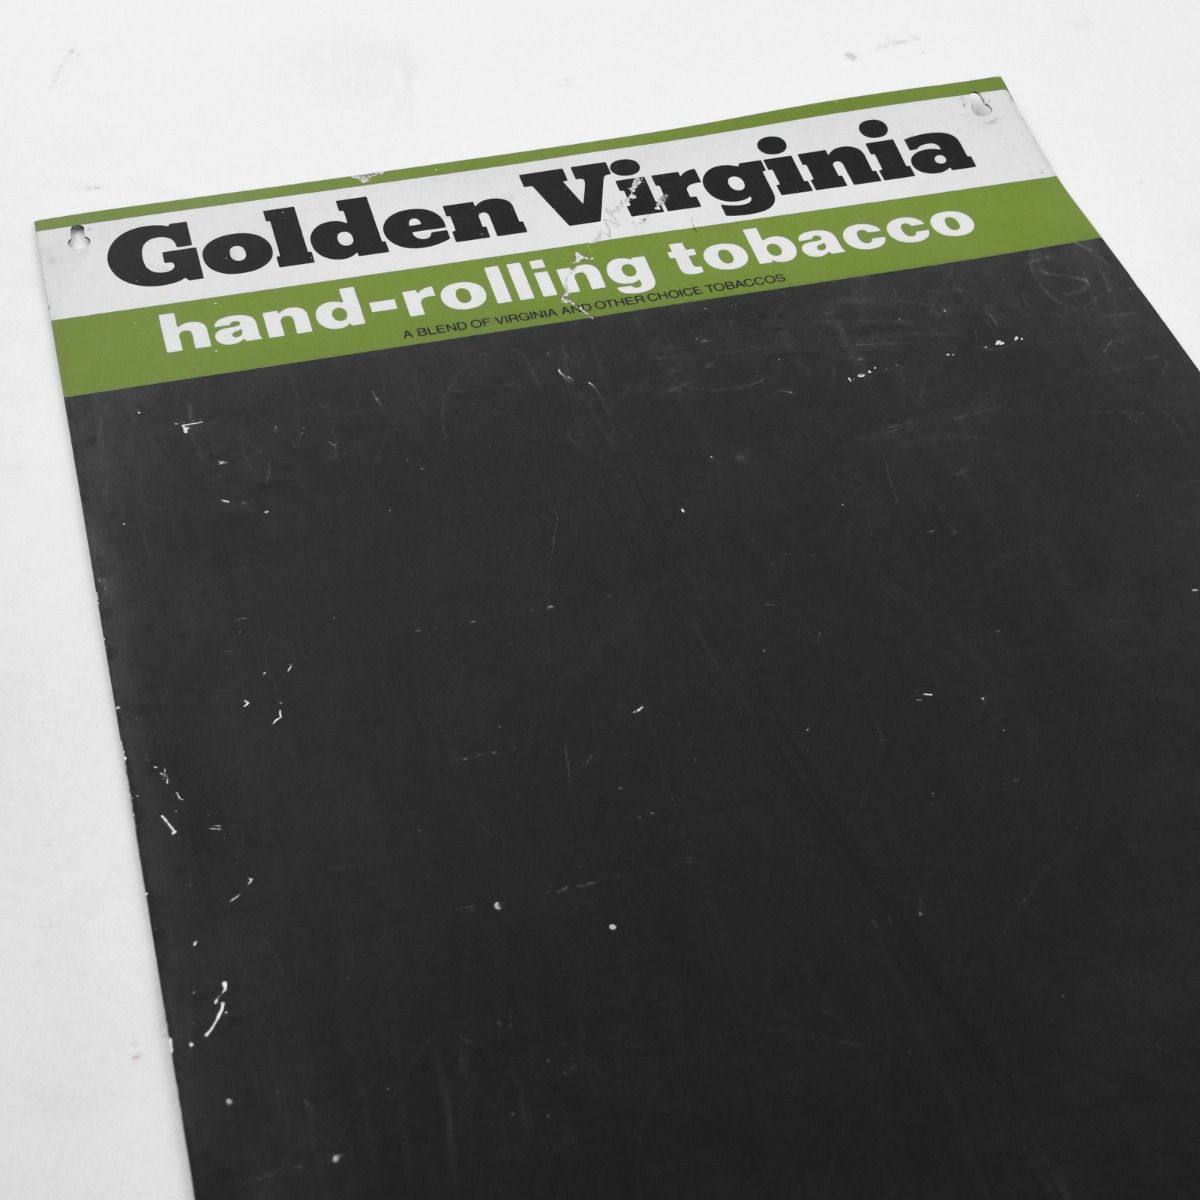 Golden Virginia 1970s Aluminium Chalkboard